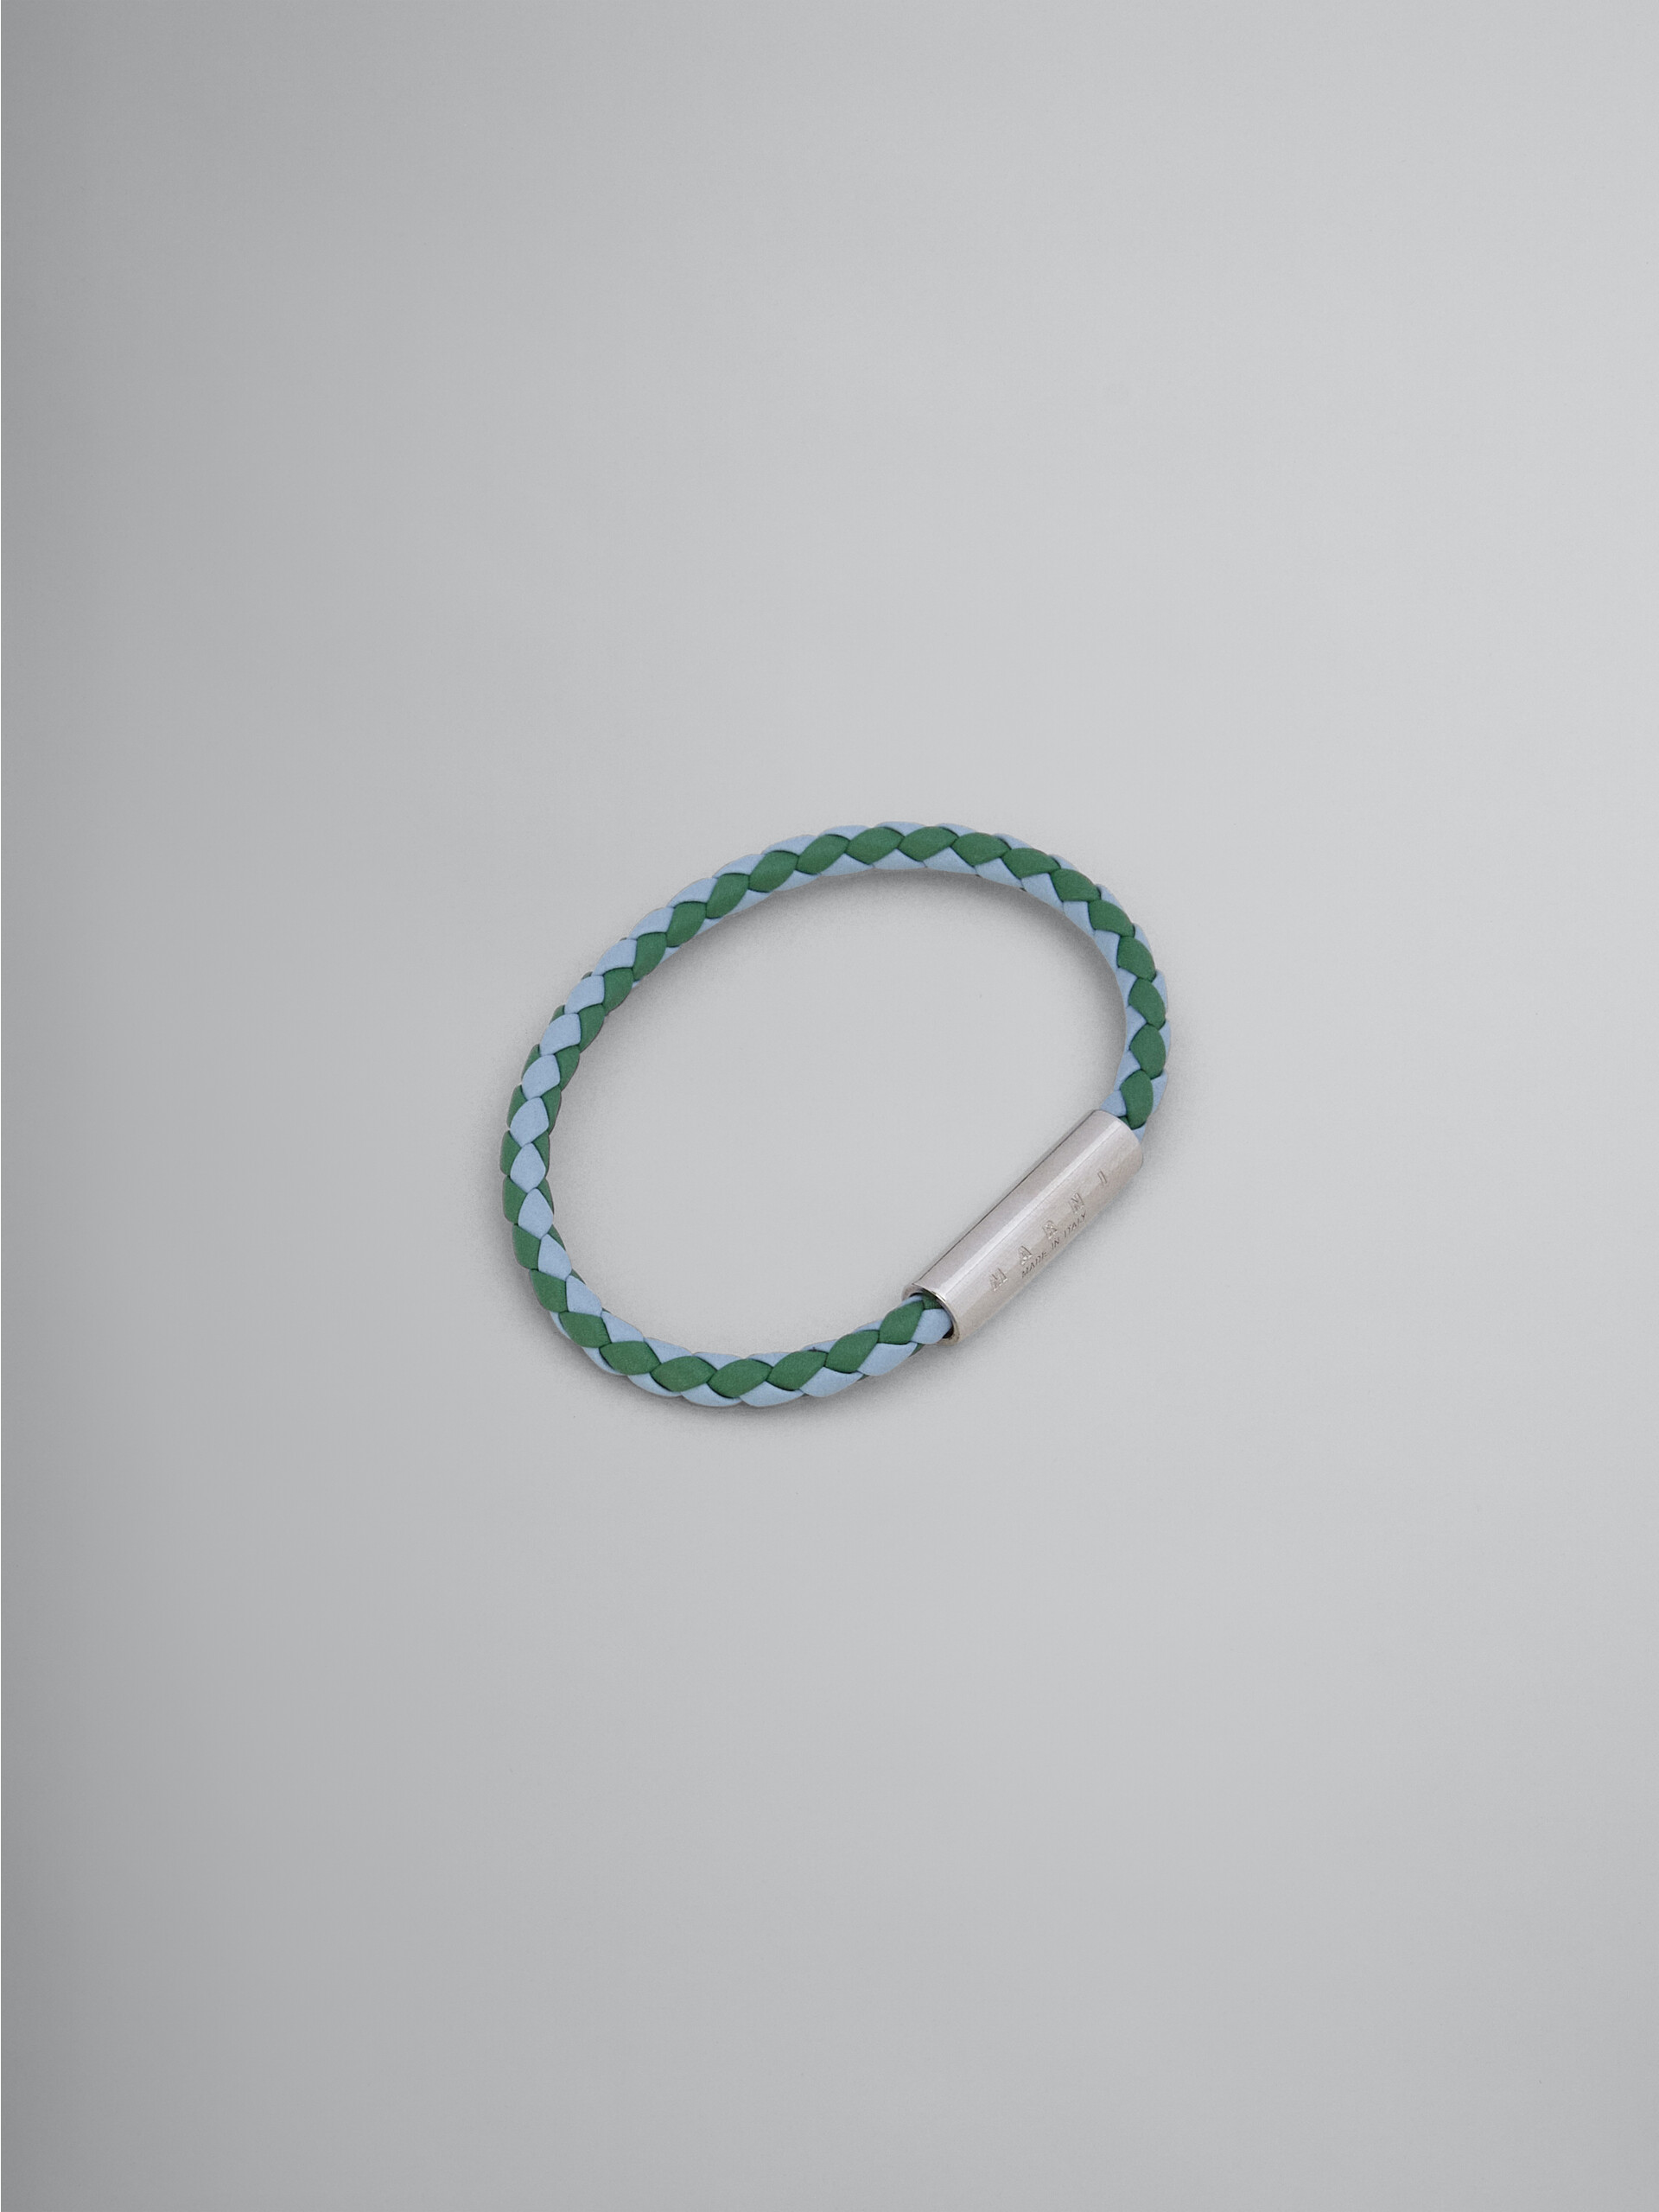 Grünes und hellblaues geflochtenes Lederarmband - Armbänder - Image 1